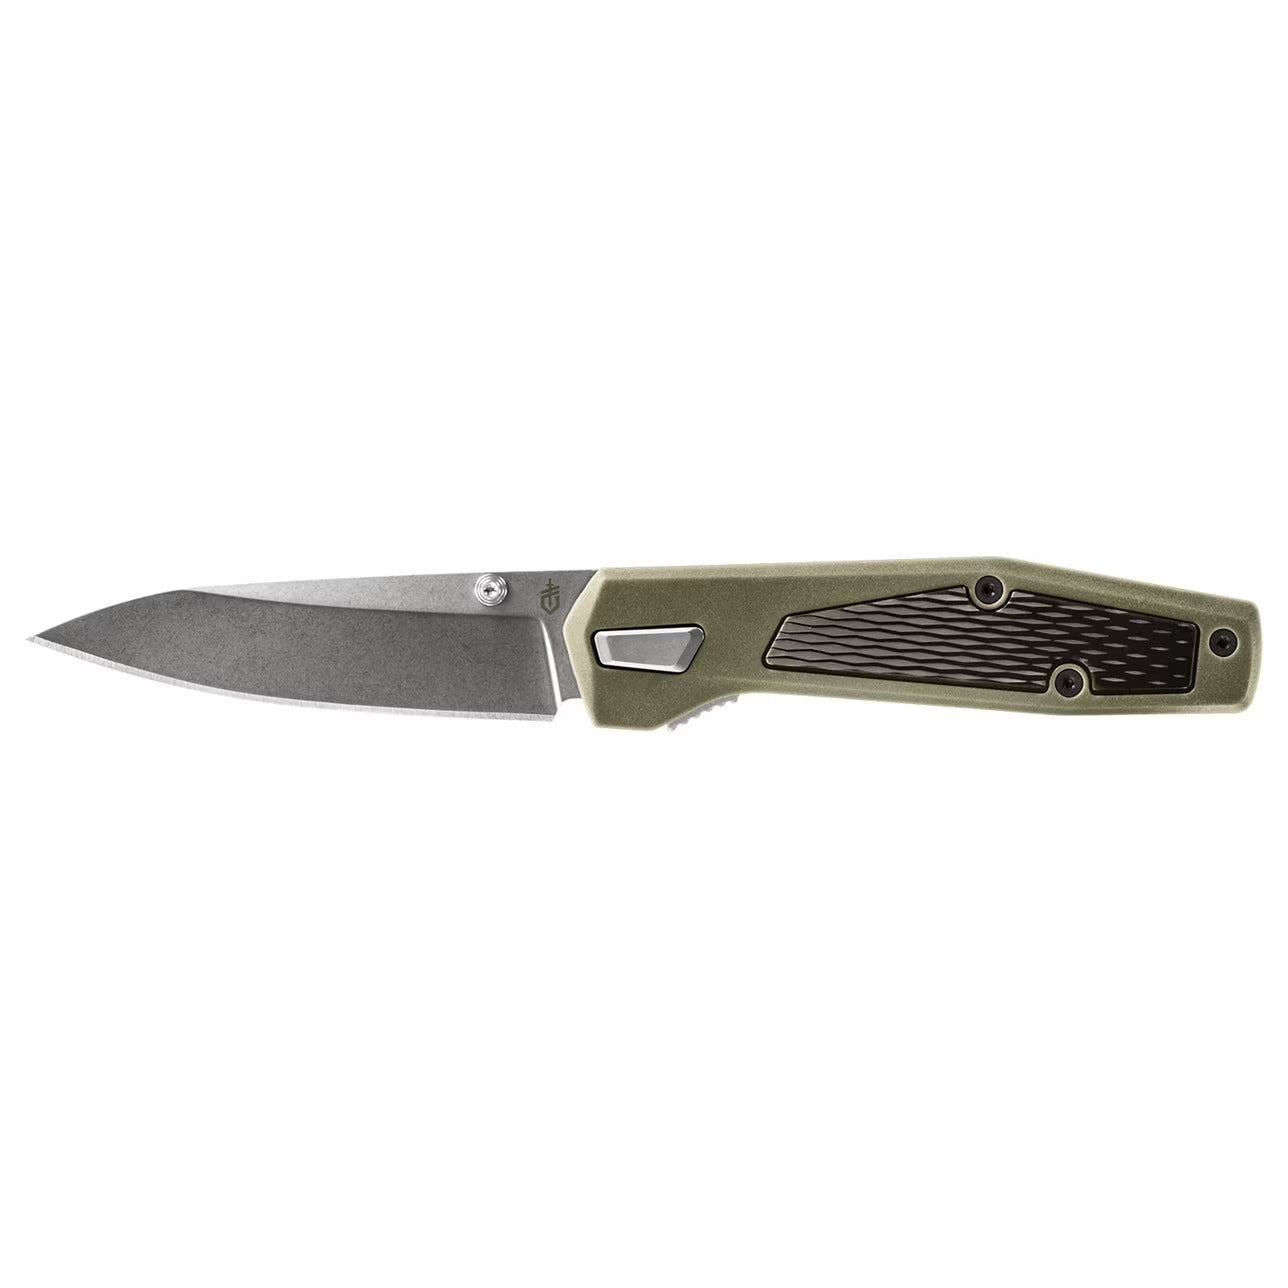 Gerber FUSE - Plain Edge, Green Handle, Stone Wash Blade - 30-001875